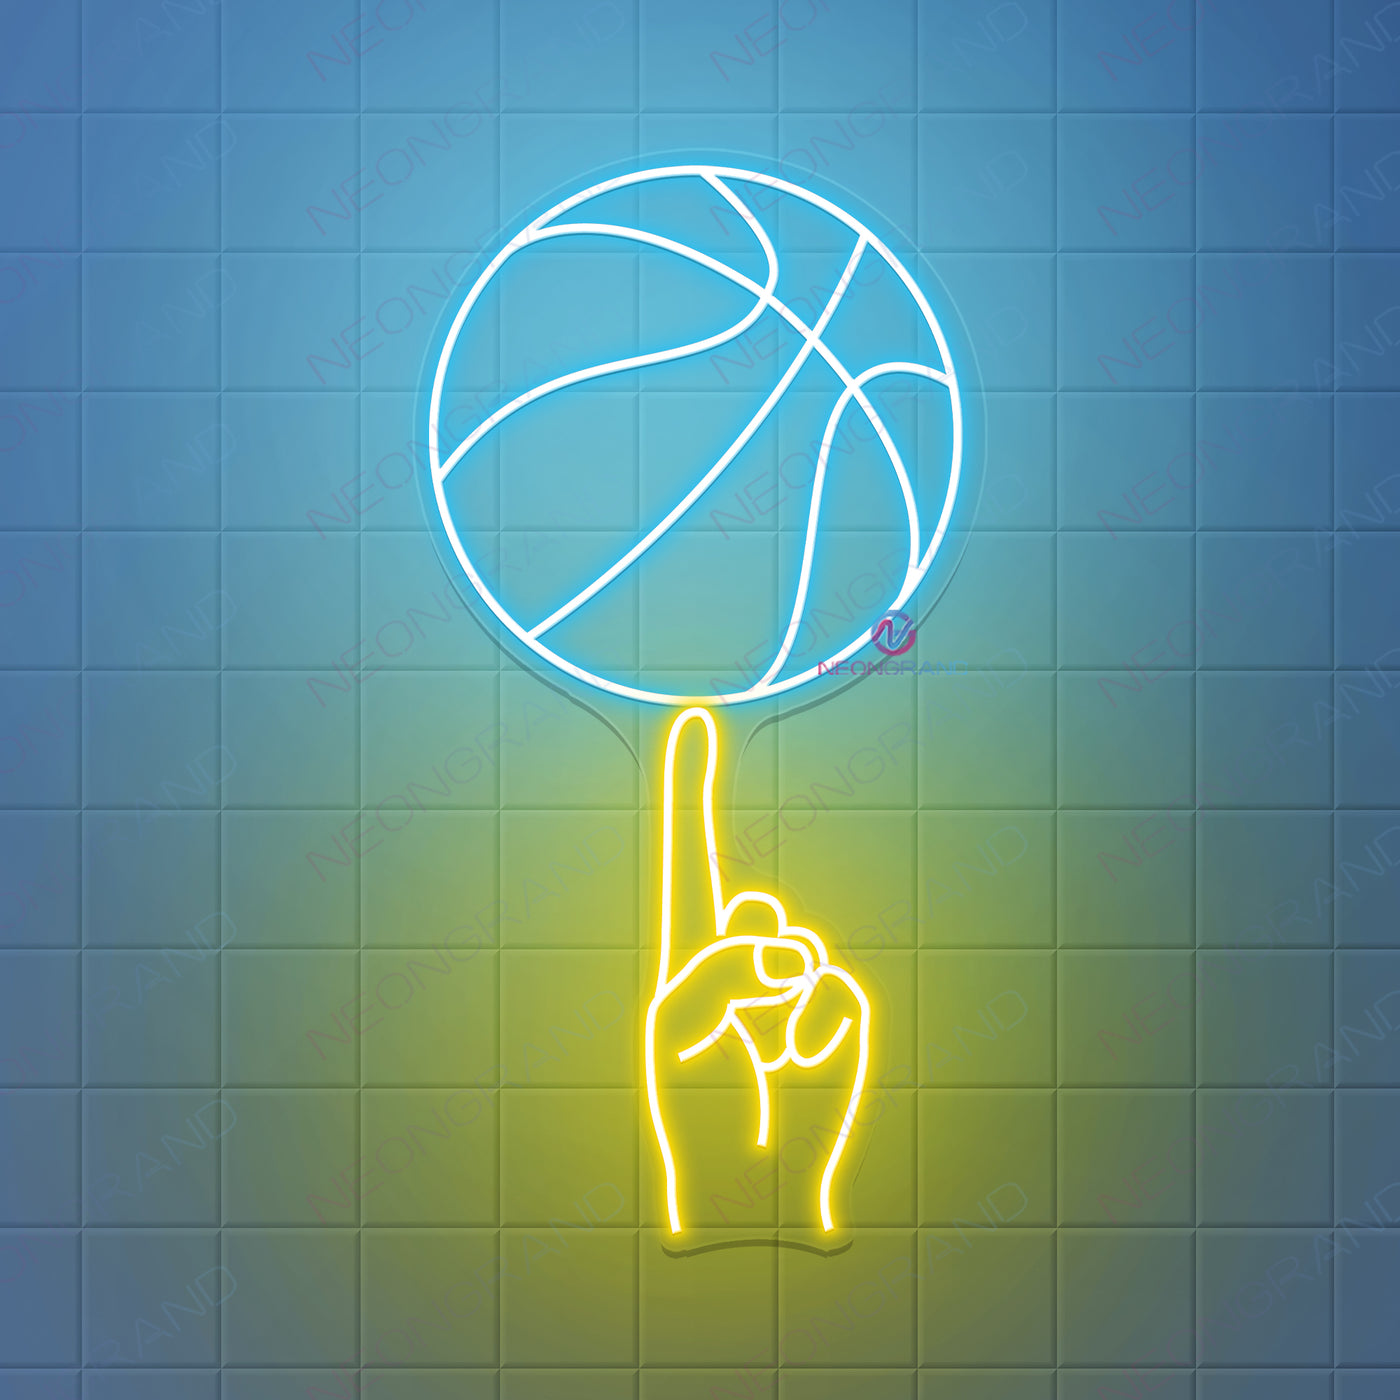 Basketball Neon Sign Game Room Led Light